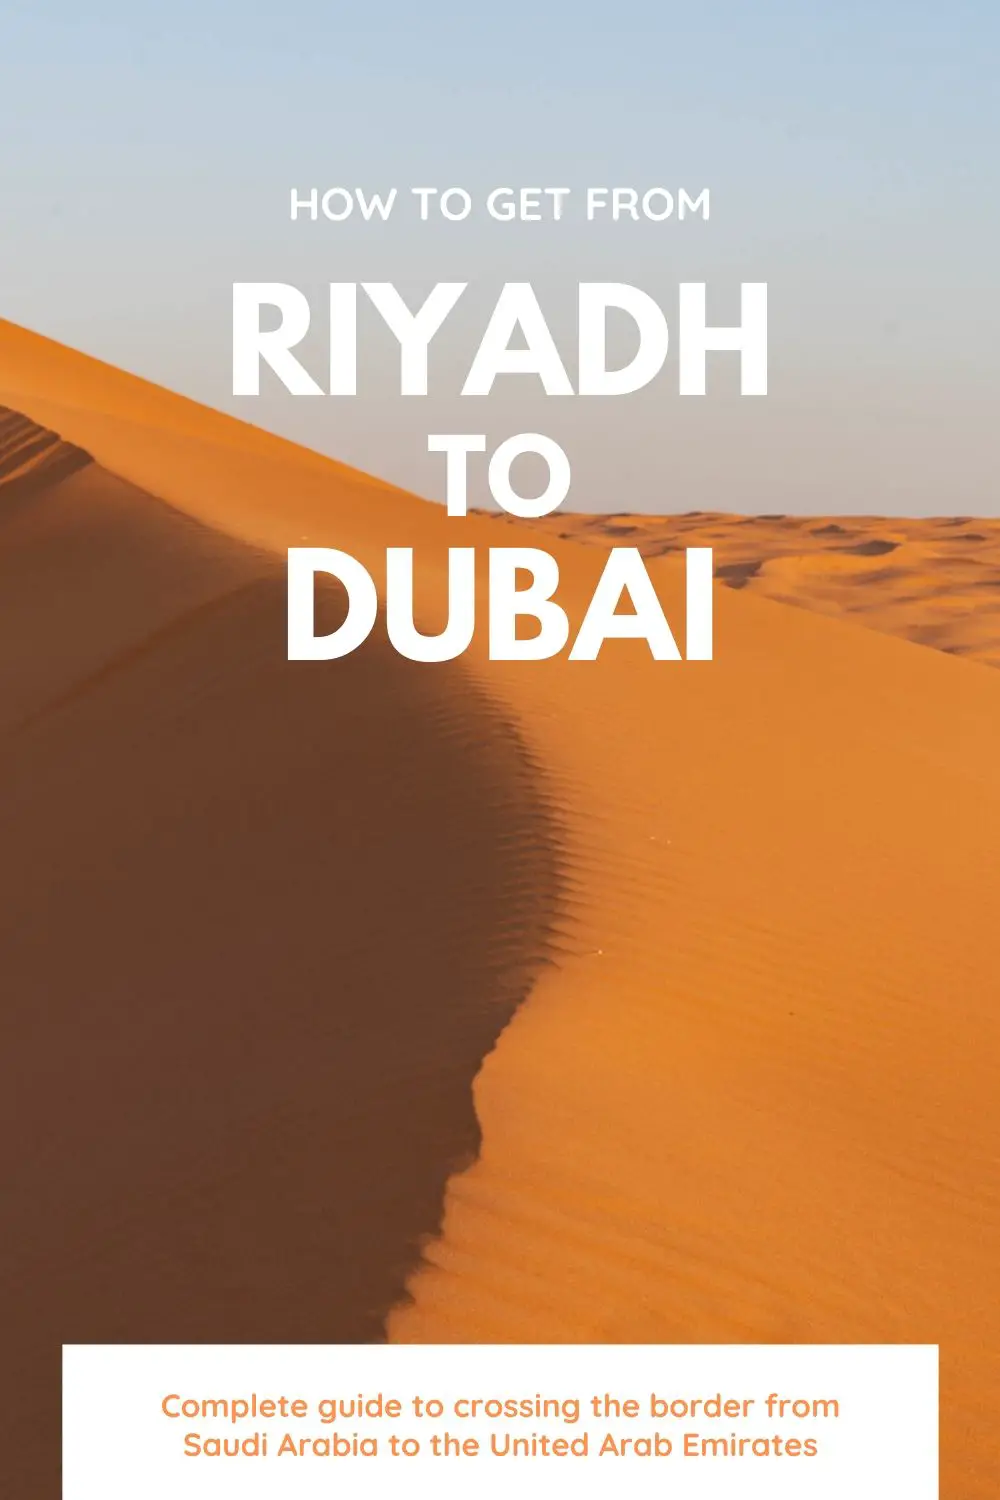 Desert near Riyadh